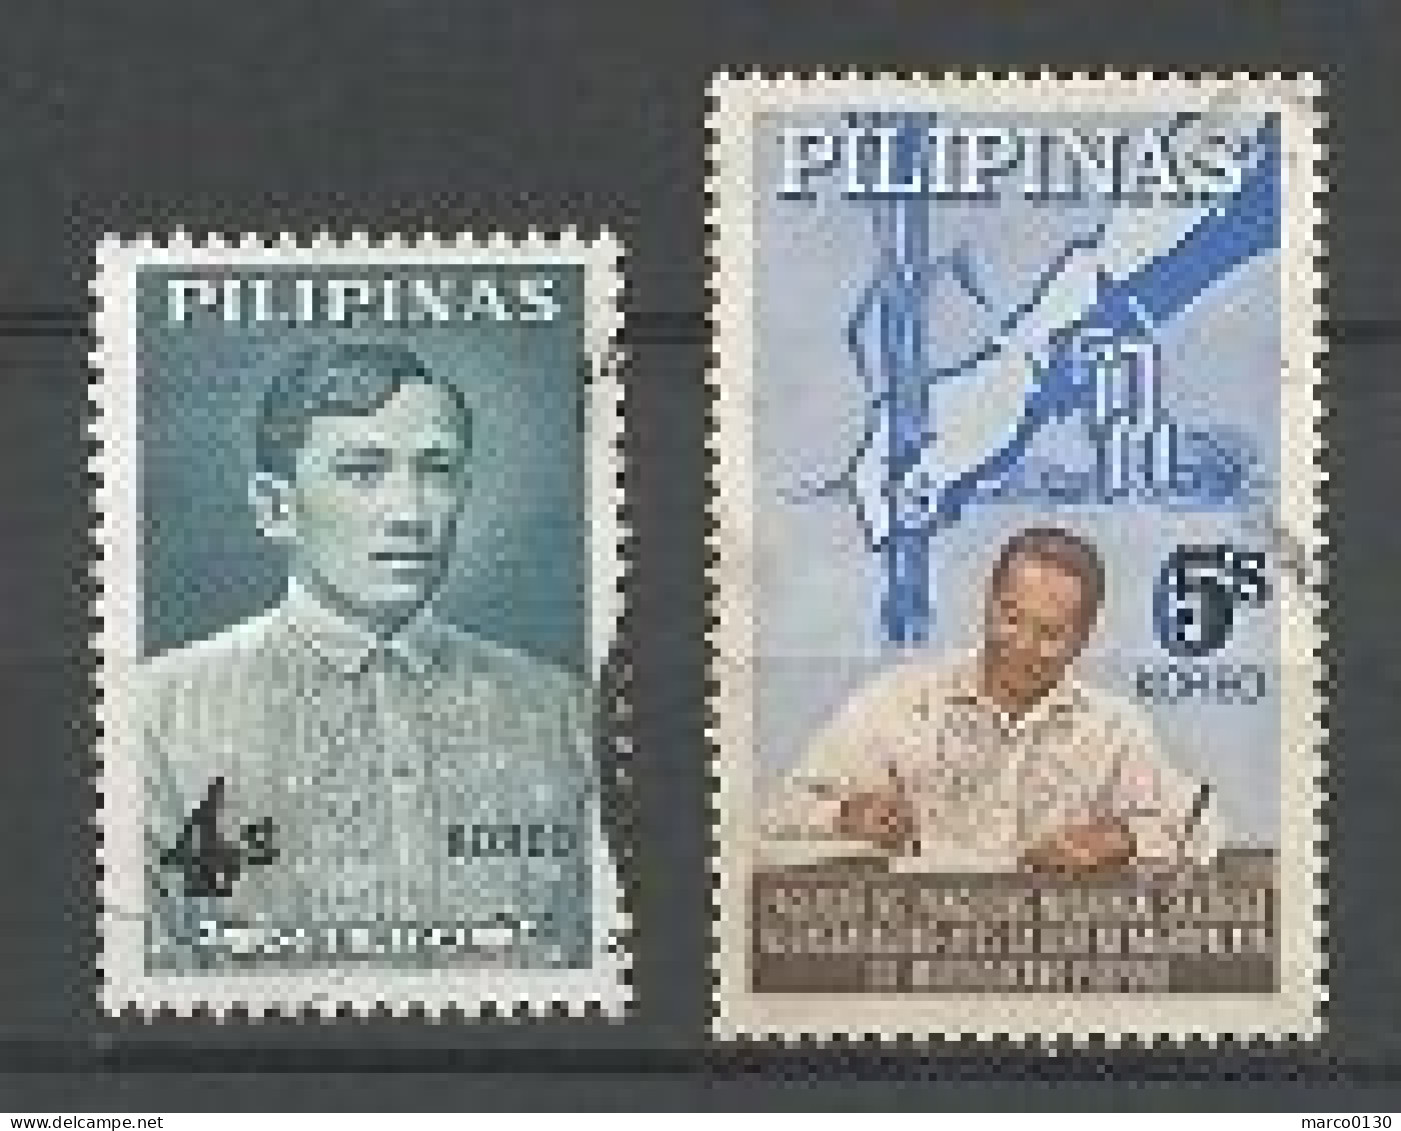 PHILIPPINES N° 667 + N° 668 OBLITERE - Philippines